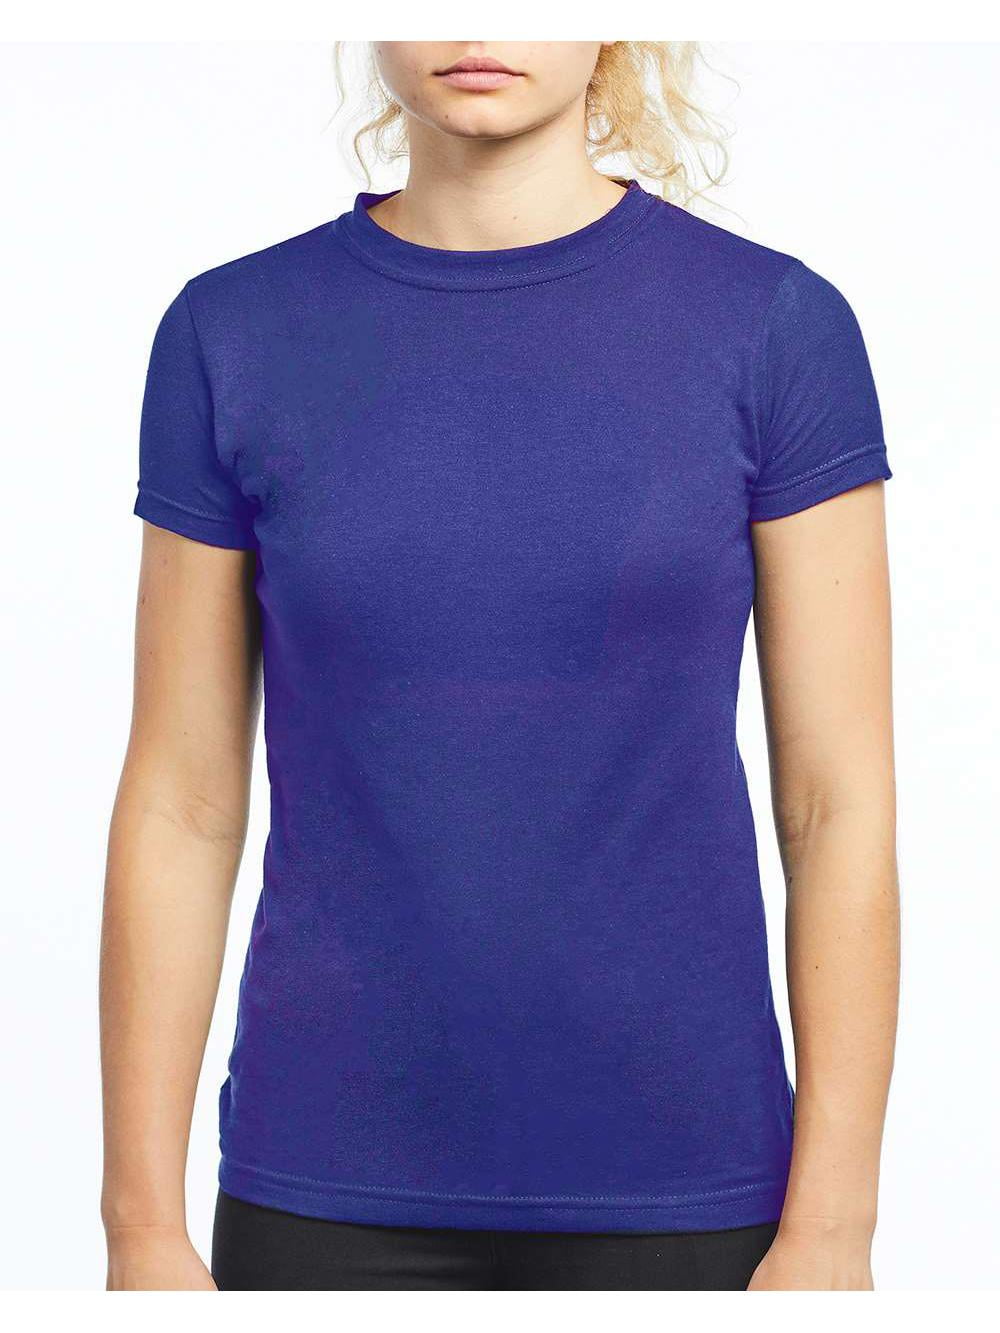 M&O - Women's Gold Soft Touch T-Shirt - 4810 - Deep Red - Size: XL